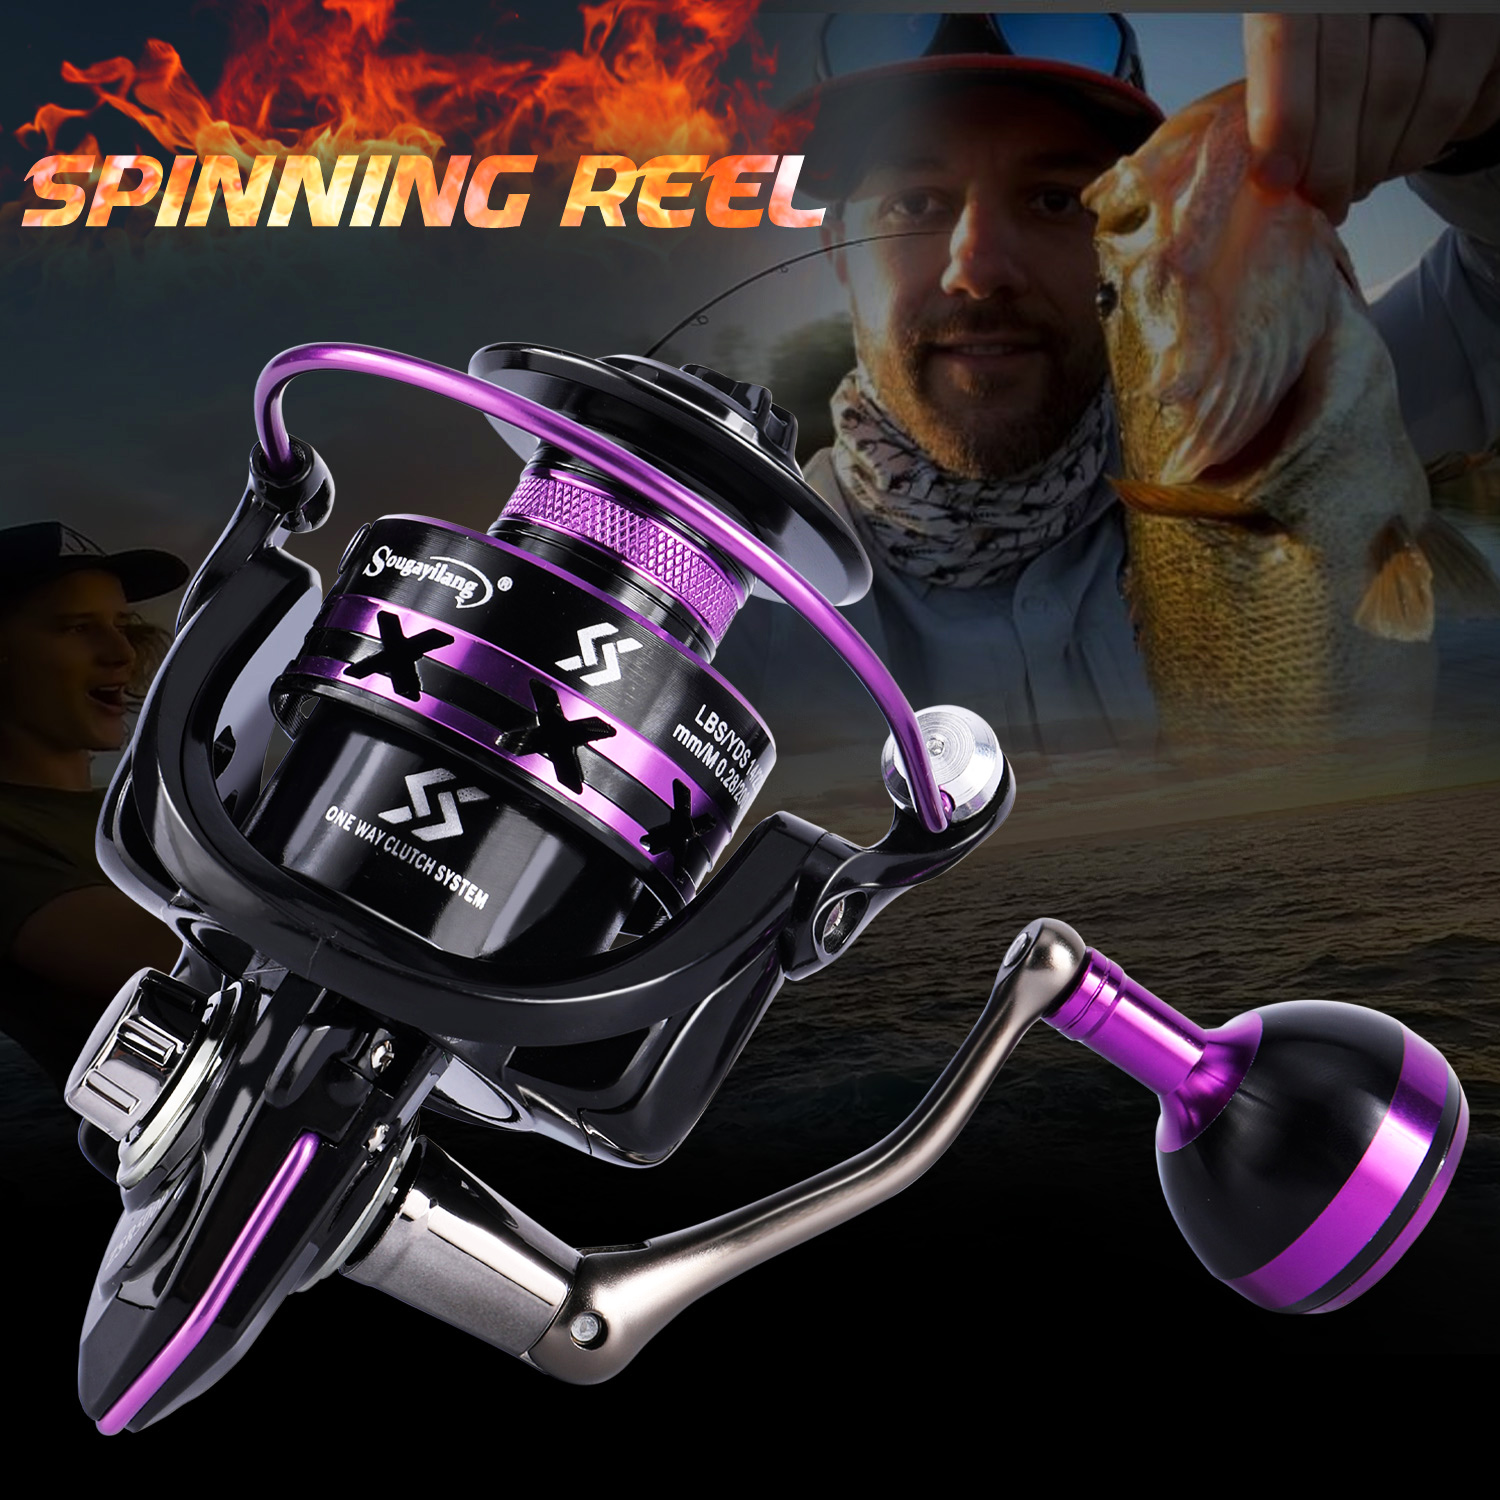 Sougayilang Spinning Fishing Reels 2000-5000 Series 12+1BB Carp